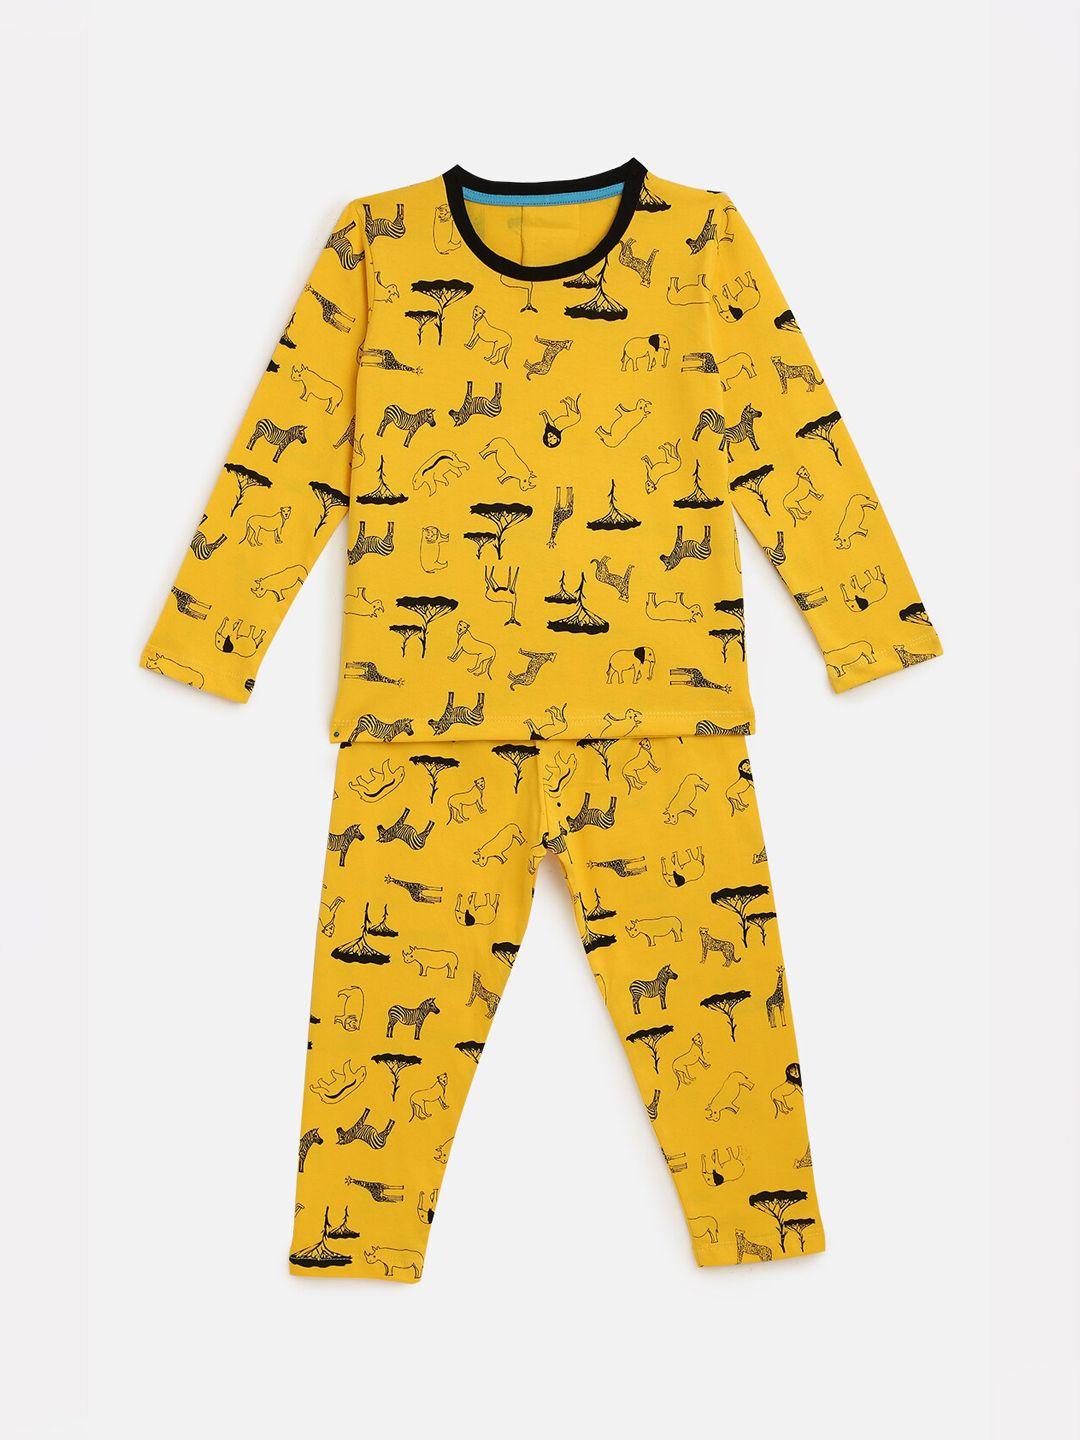 kidscraft boys yellow printed night suit